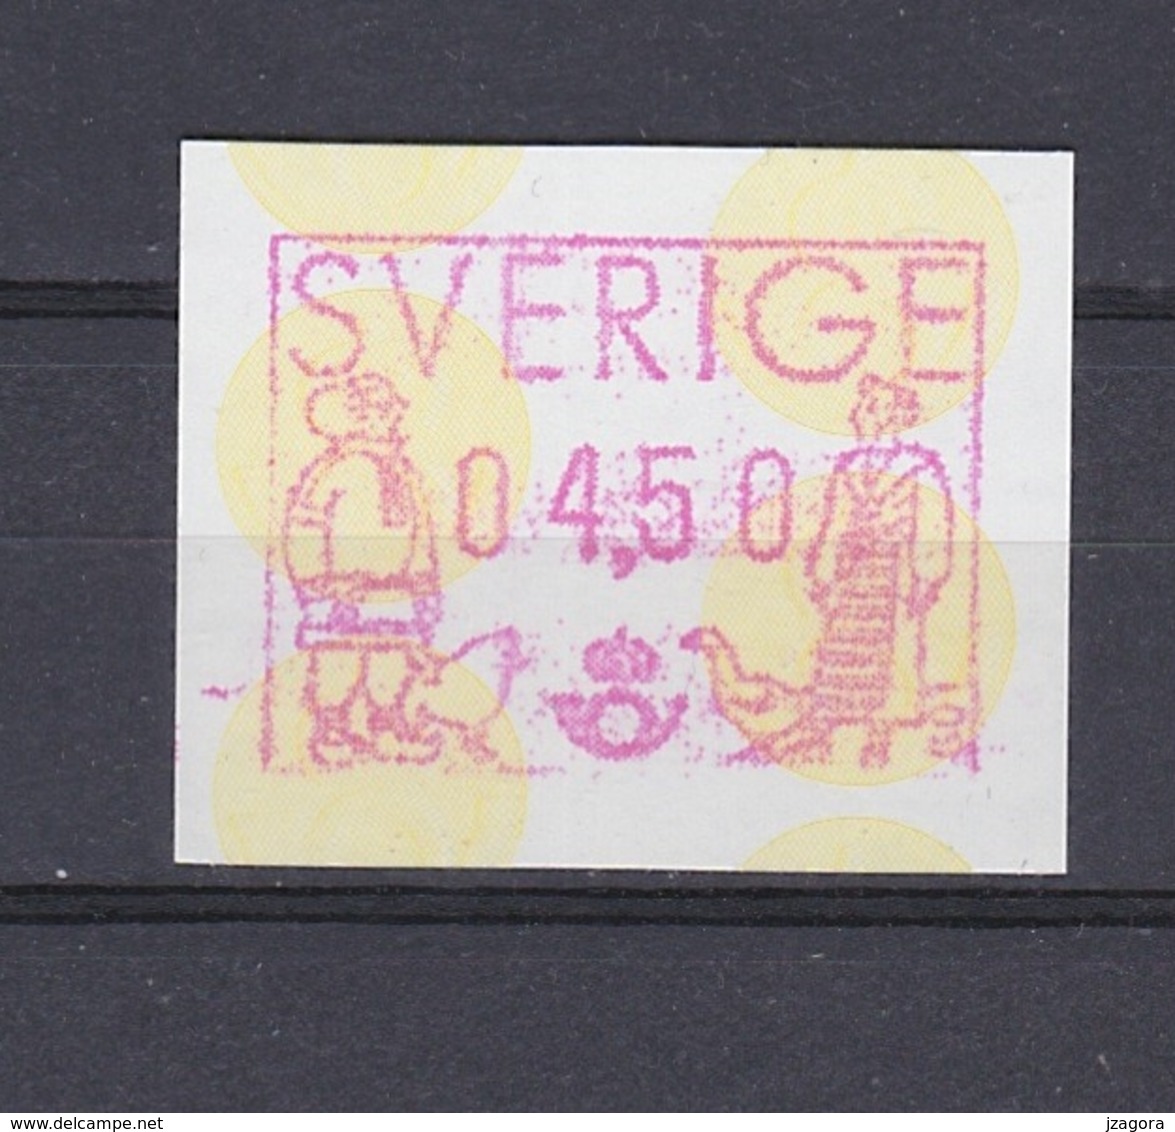 SWEDEN SUEDE SCHWEDEN 1991 ATM PRAGMA FRAMA AUTOMATIC STAMPS AUTOMATPORTO AUTOMATENMARKEN AUTOMAT MÄRKE 4,50 Kr MNH (**) - Machine Labels [ATM]